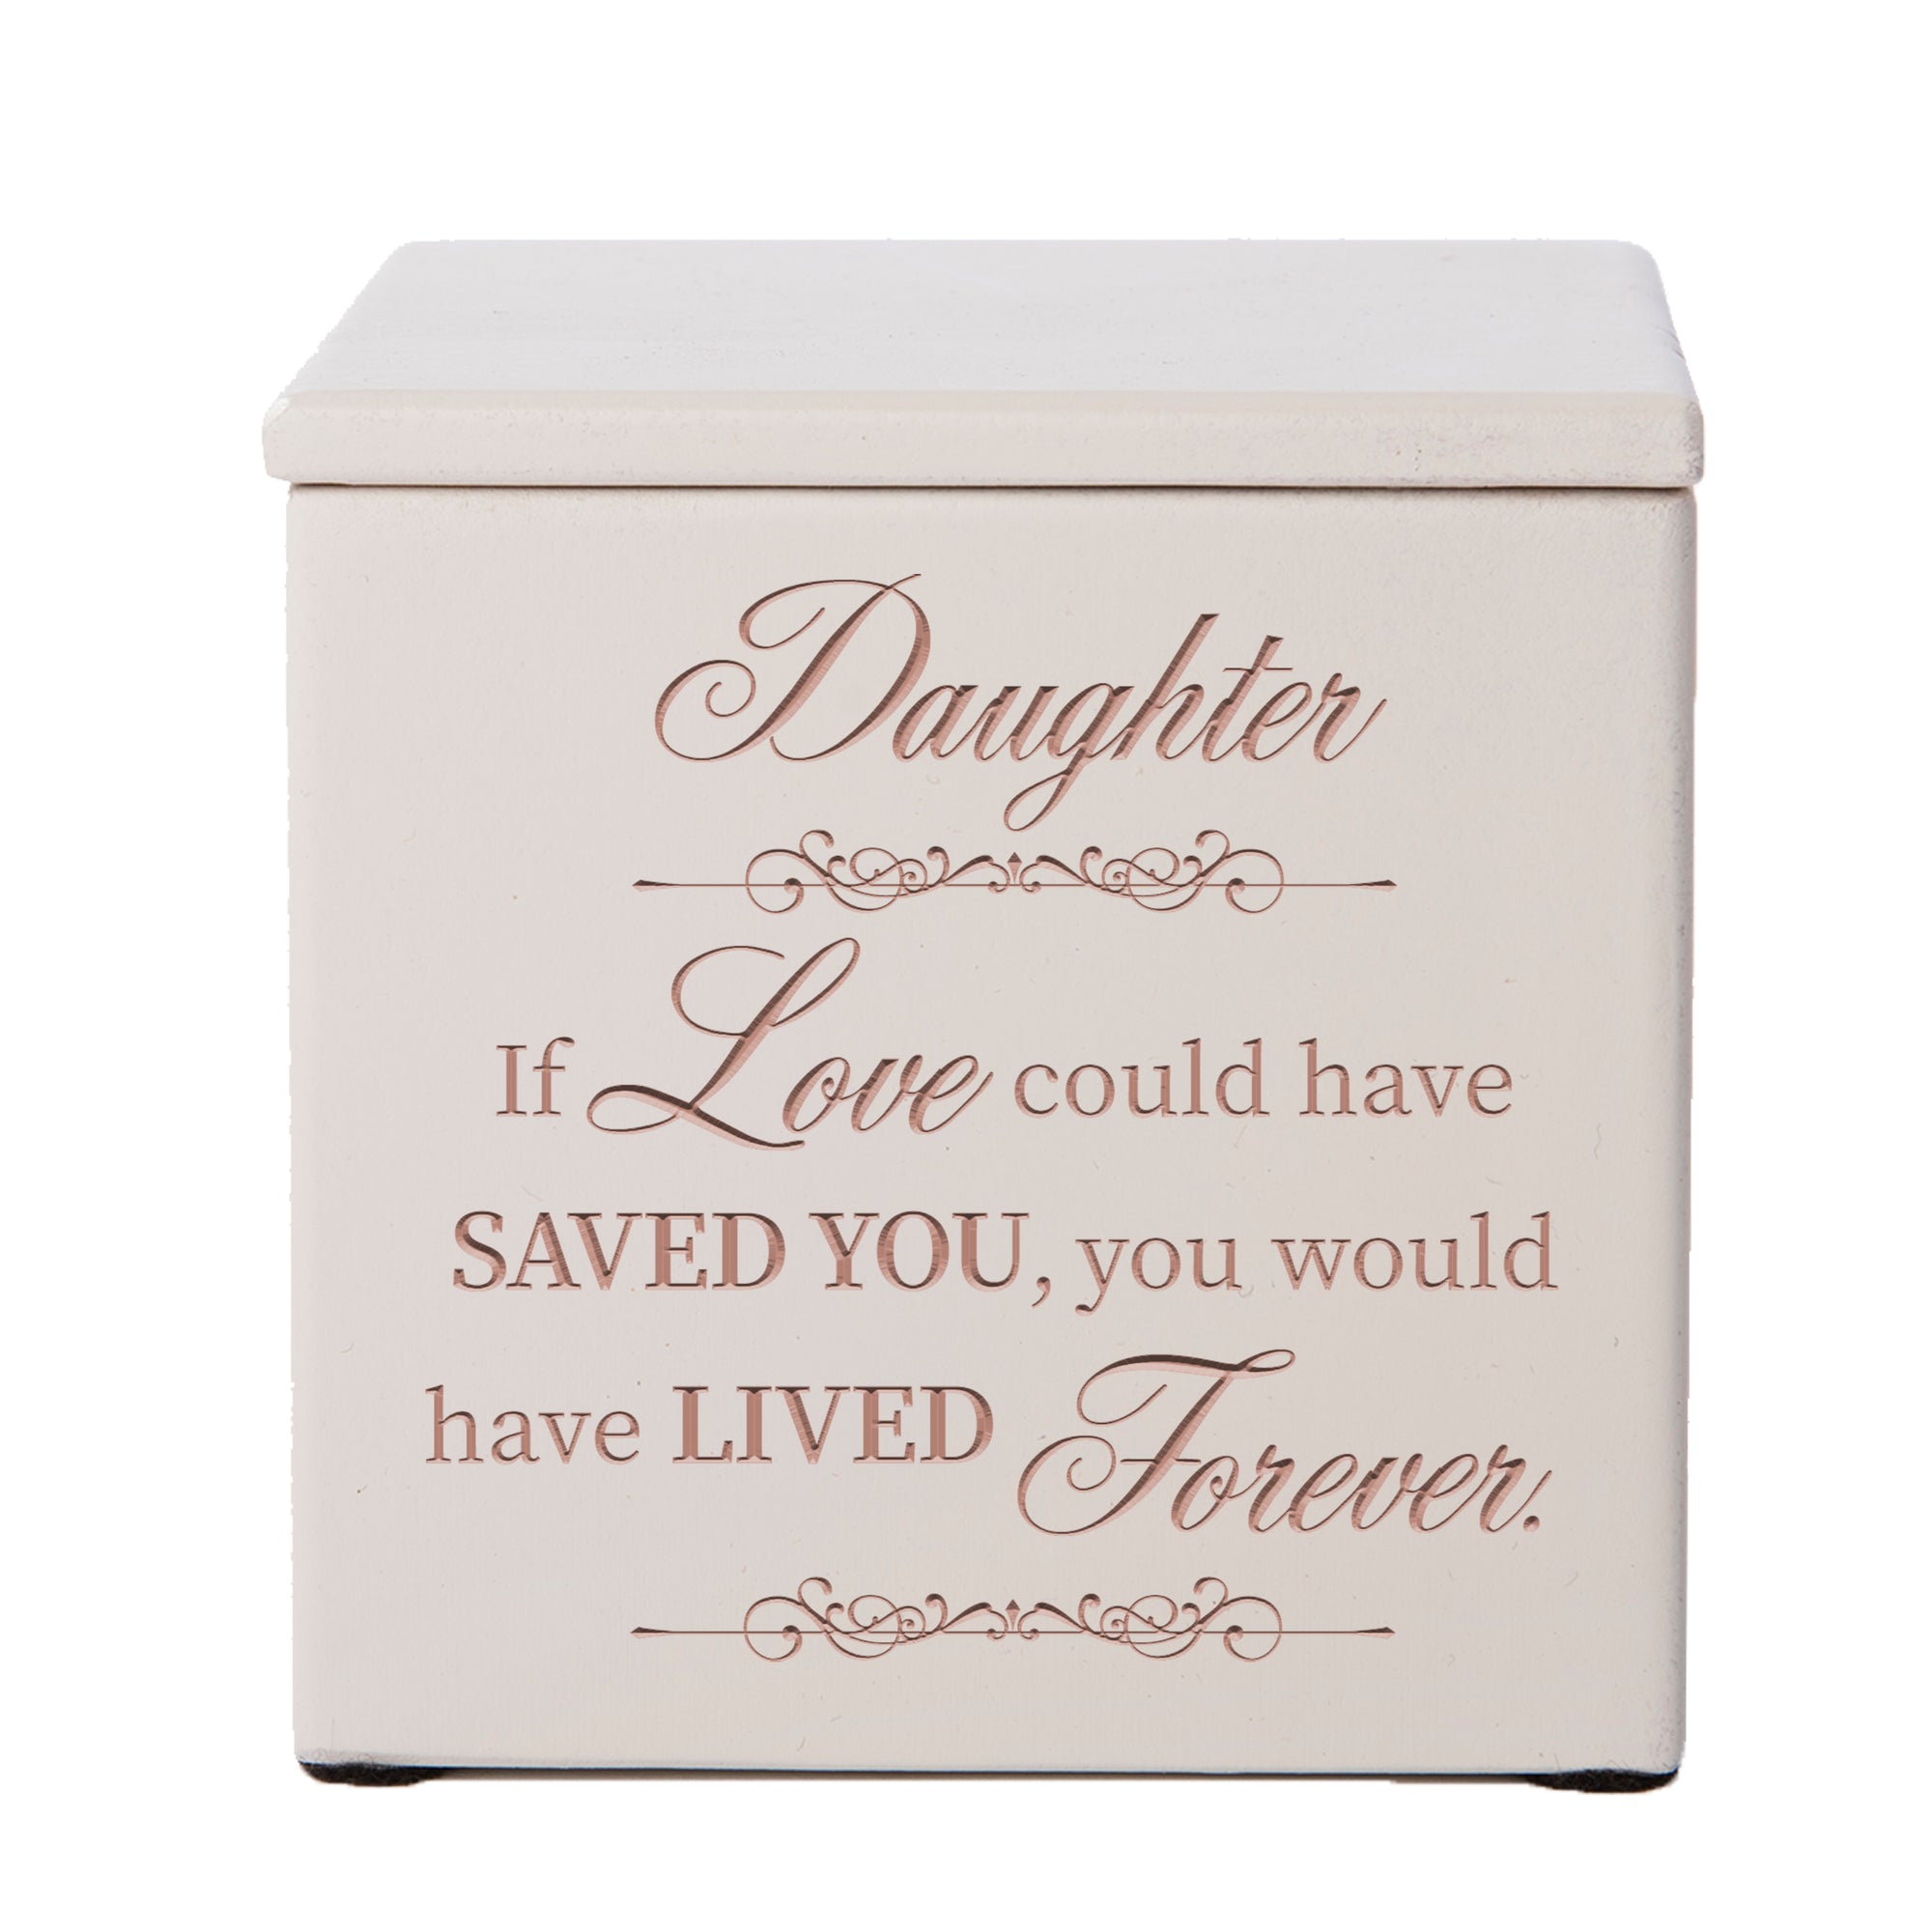 High-quality wooden memorial cremation urn keepsake box.